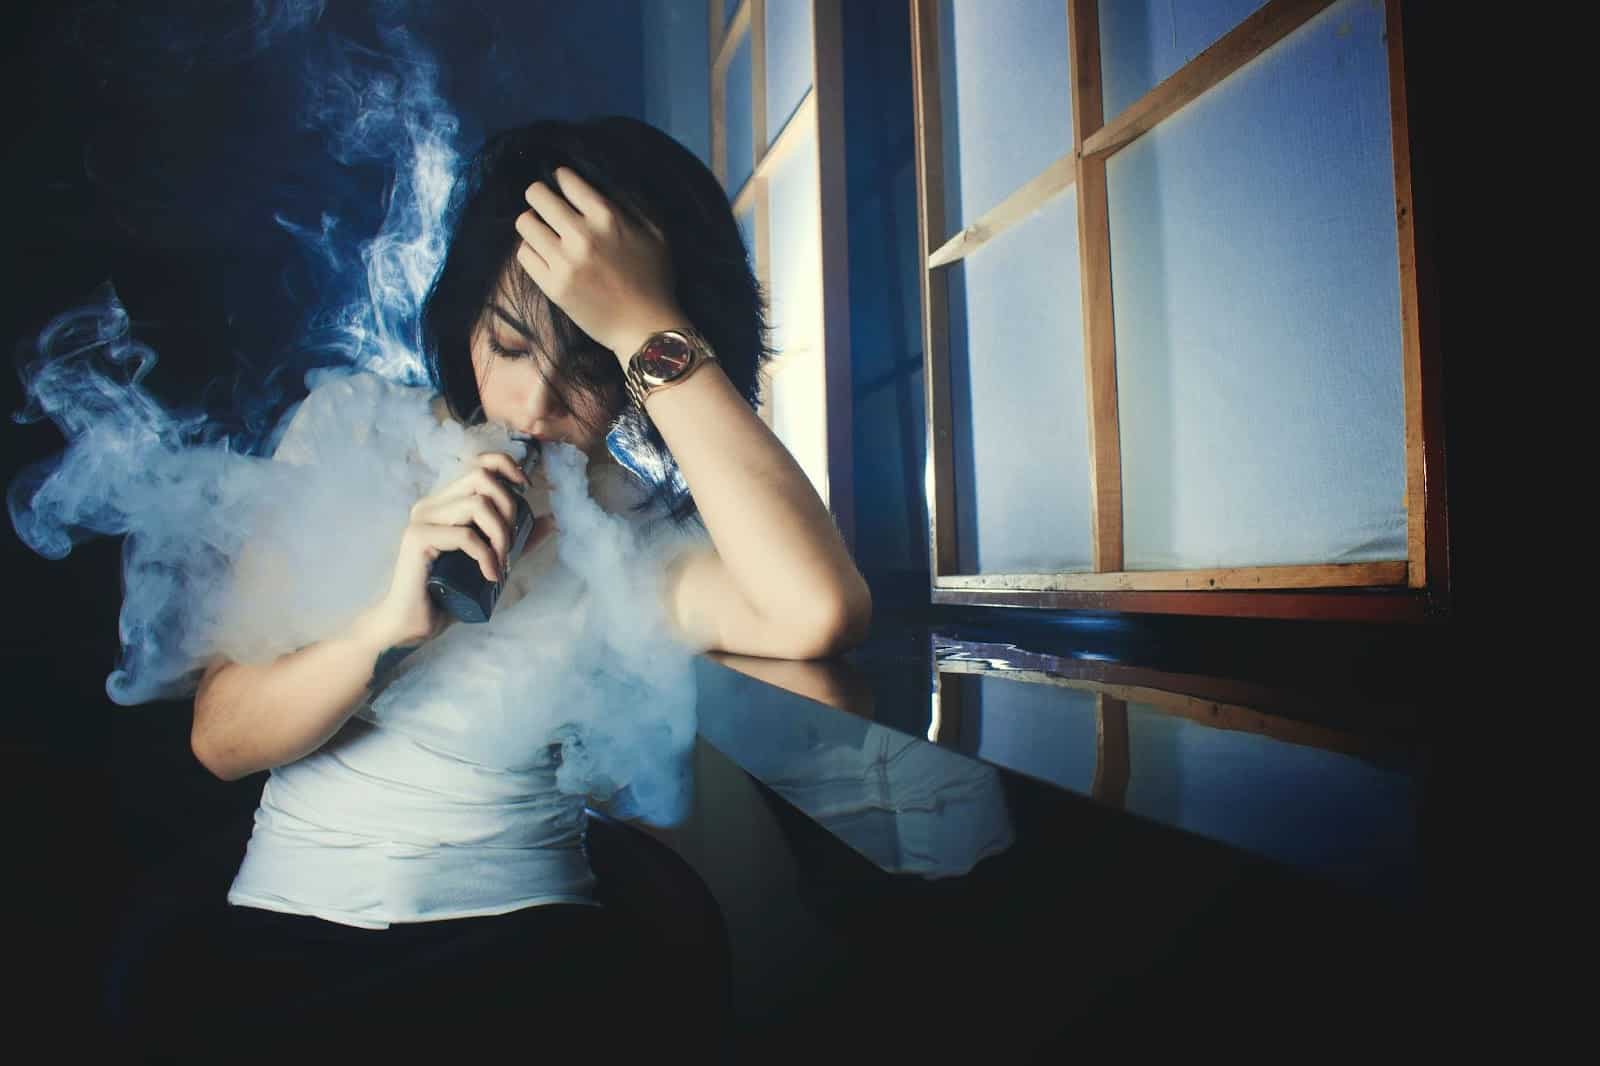 Apa la plamani de la tigara electronica – Mit sau realitate?